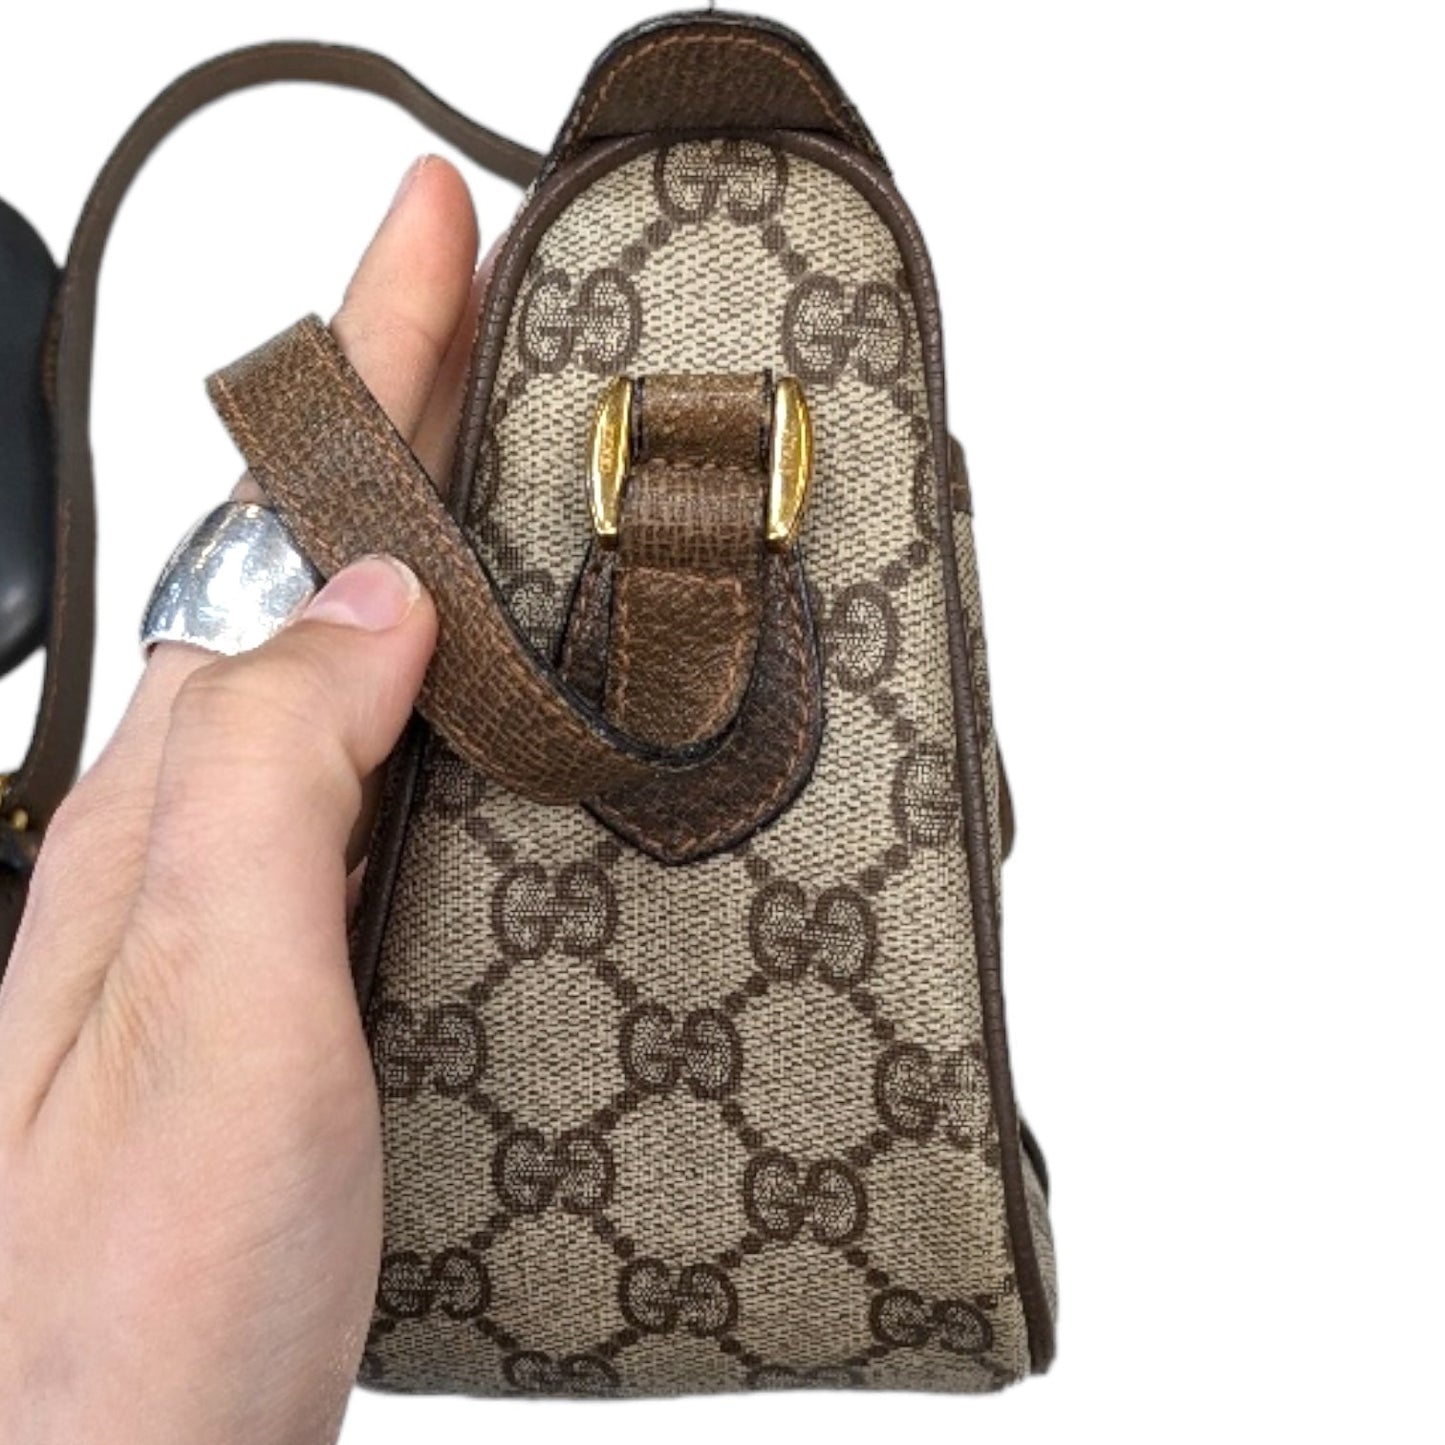 Handbag Luxury Designer Gucci, Size Medium